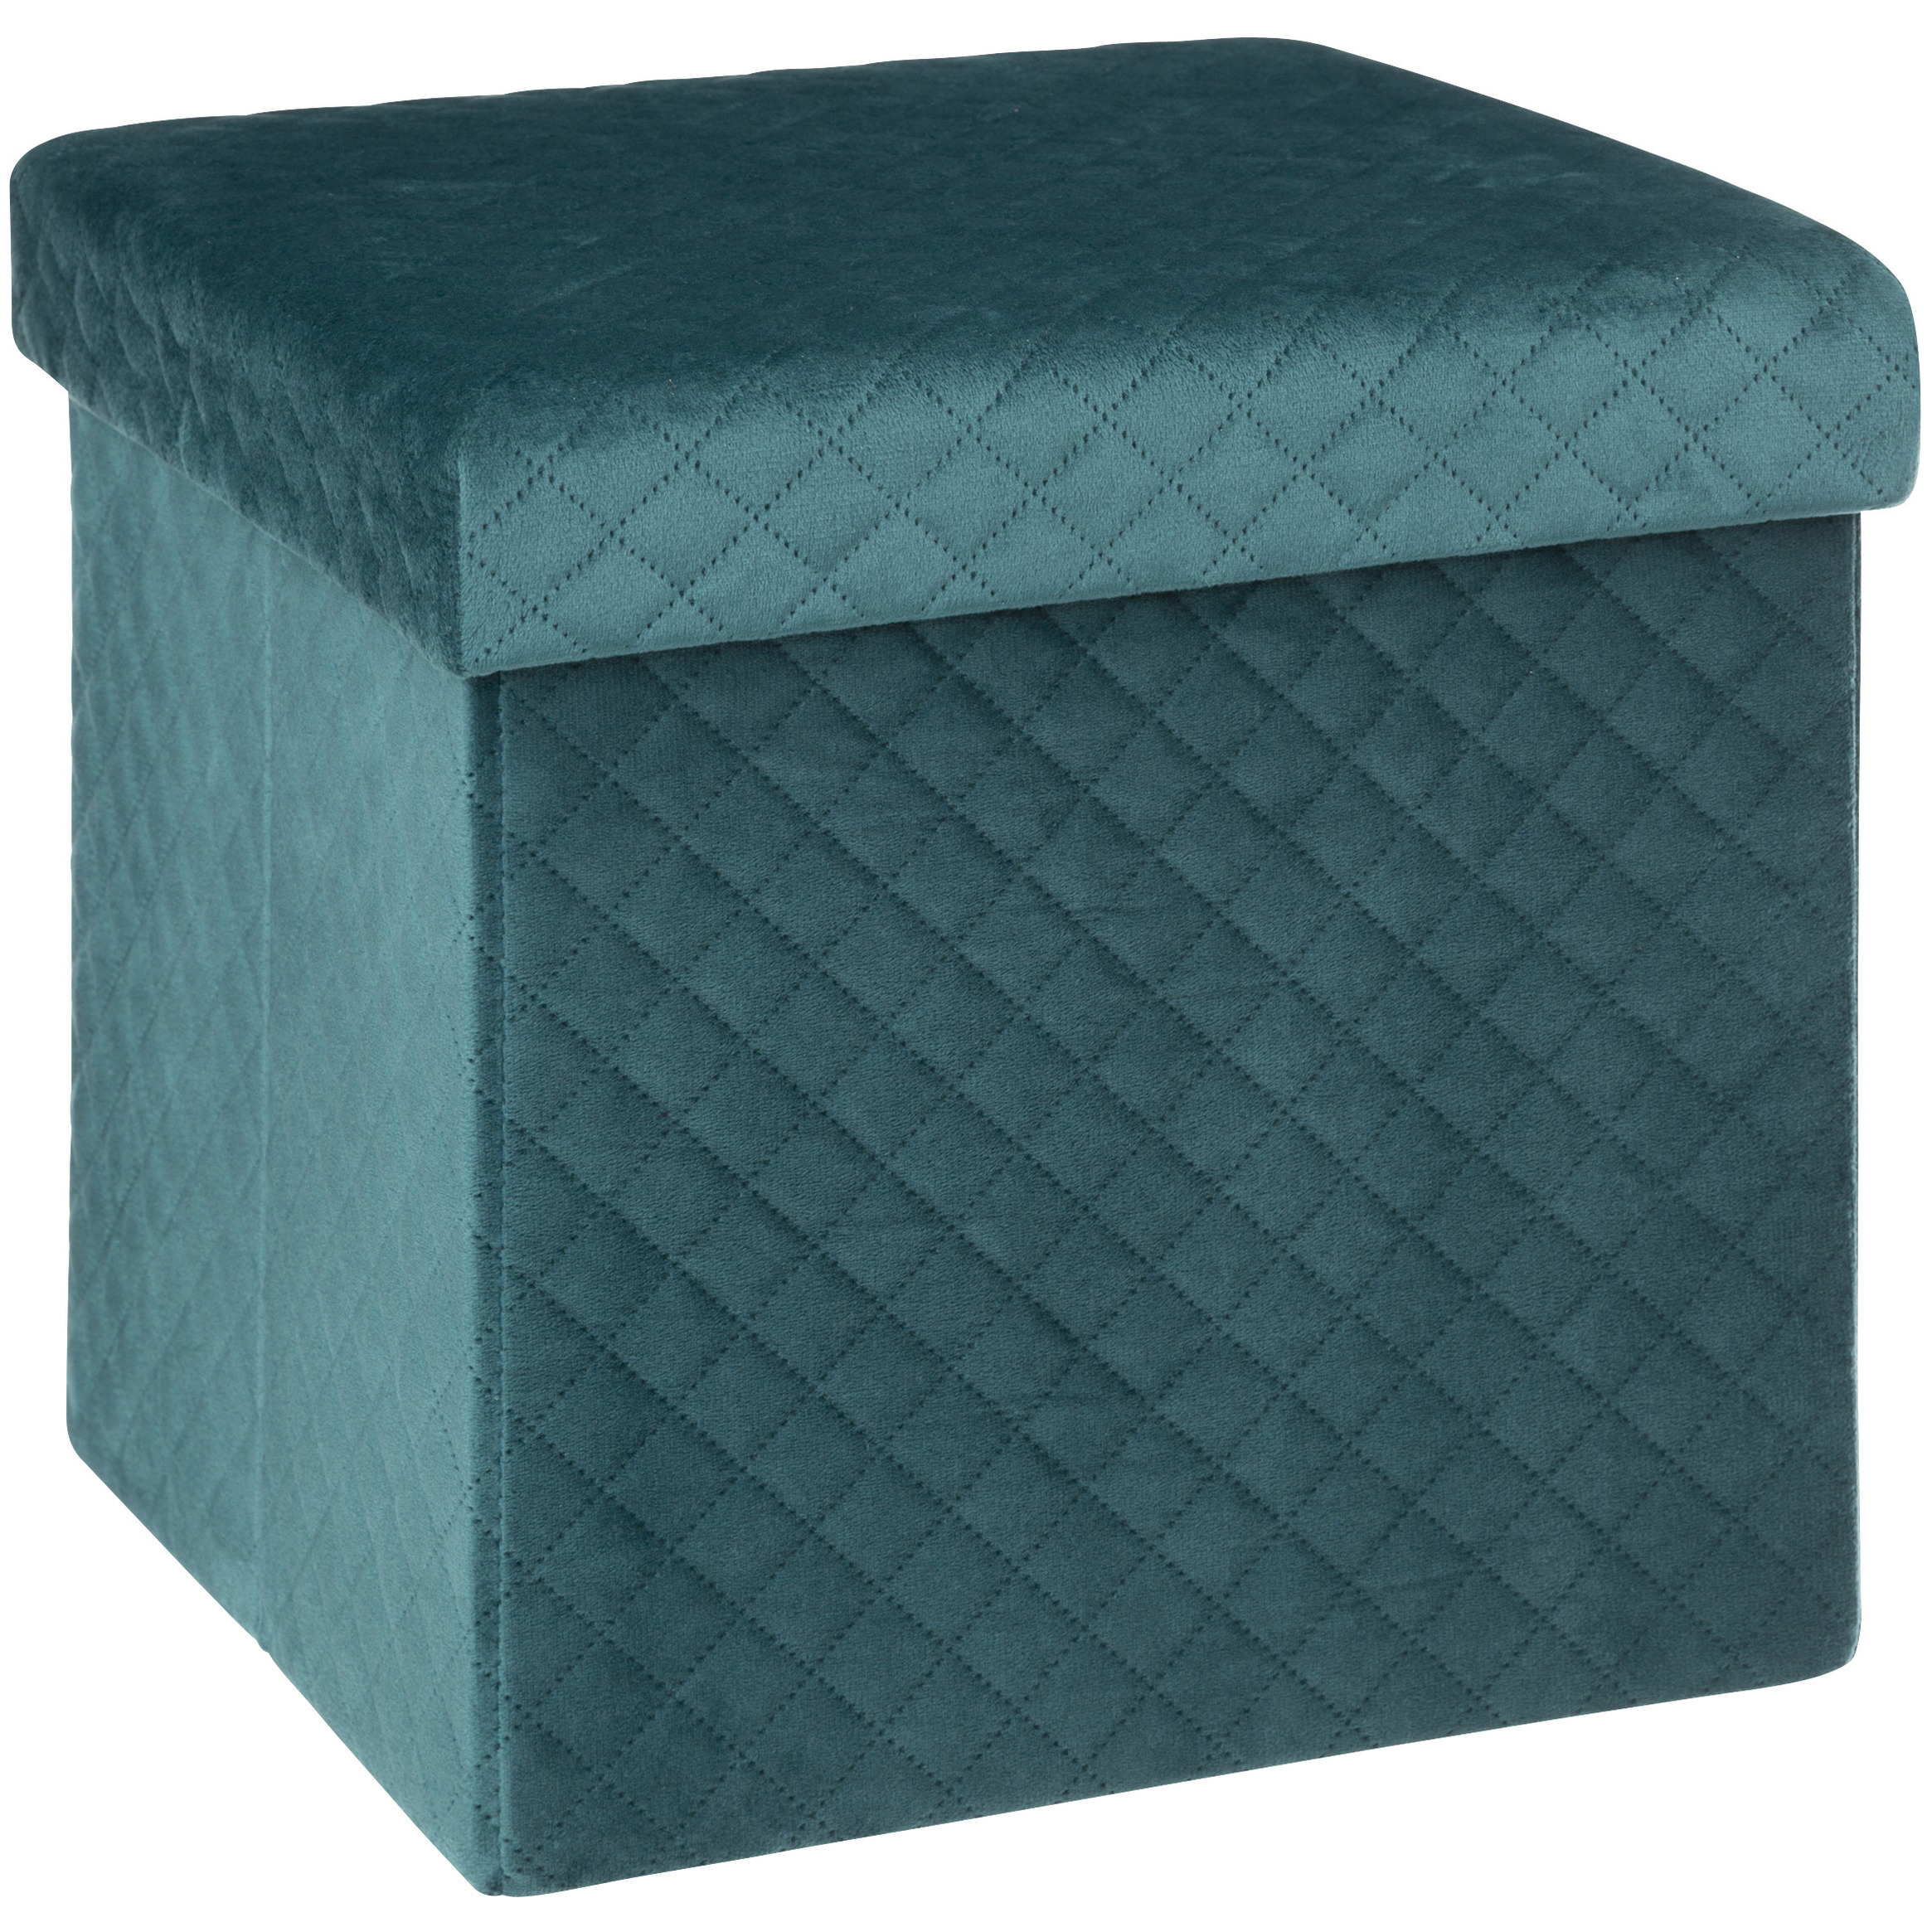 Poef-hocker opbergbox fluweel blauw kunststof-mdf 31 x 31 x 31 cm opvouwbaar